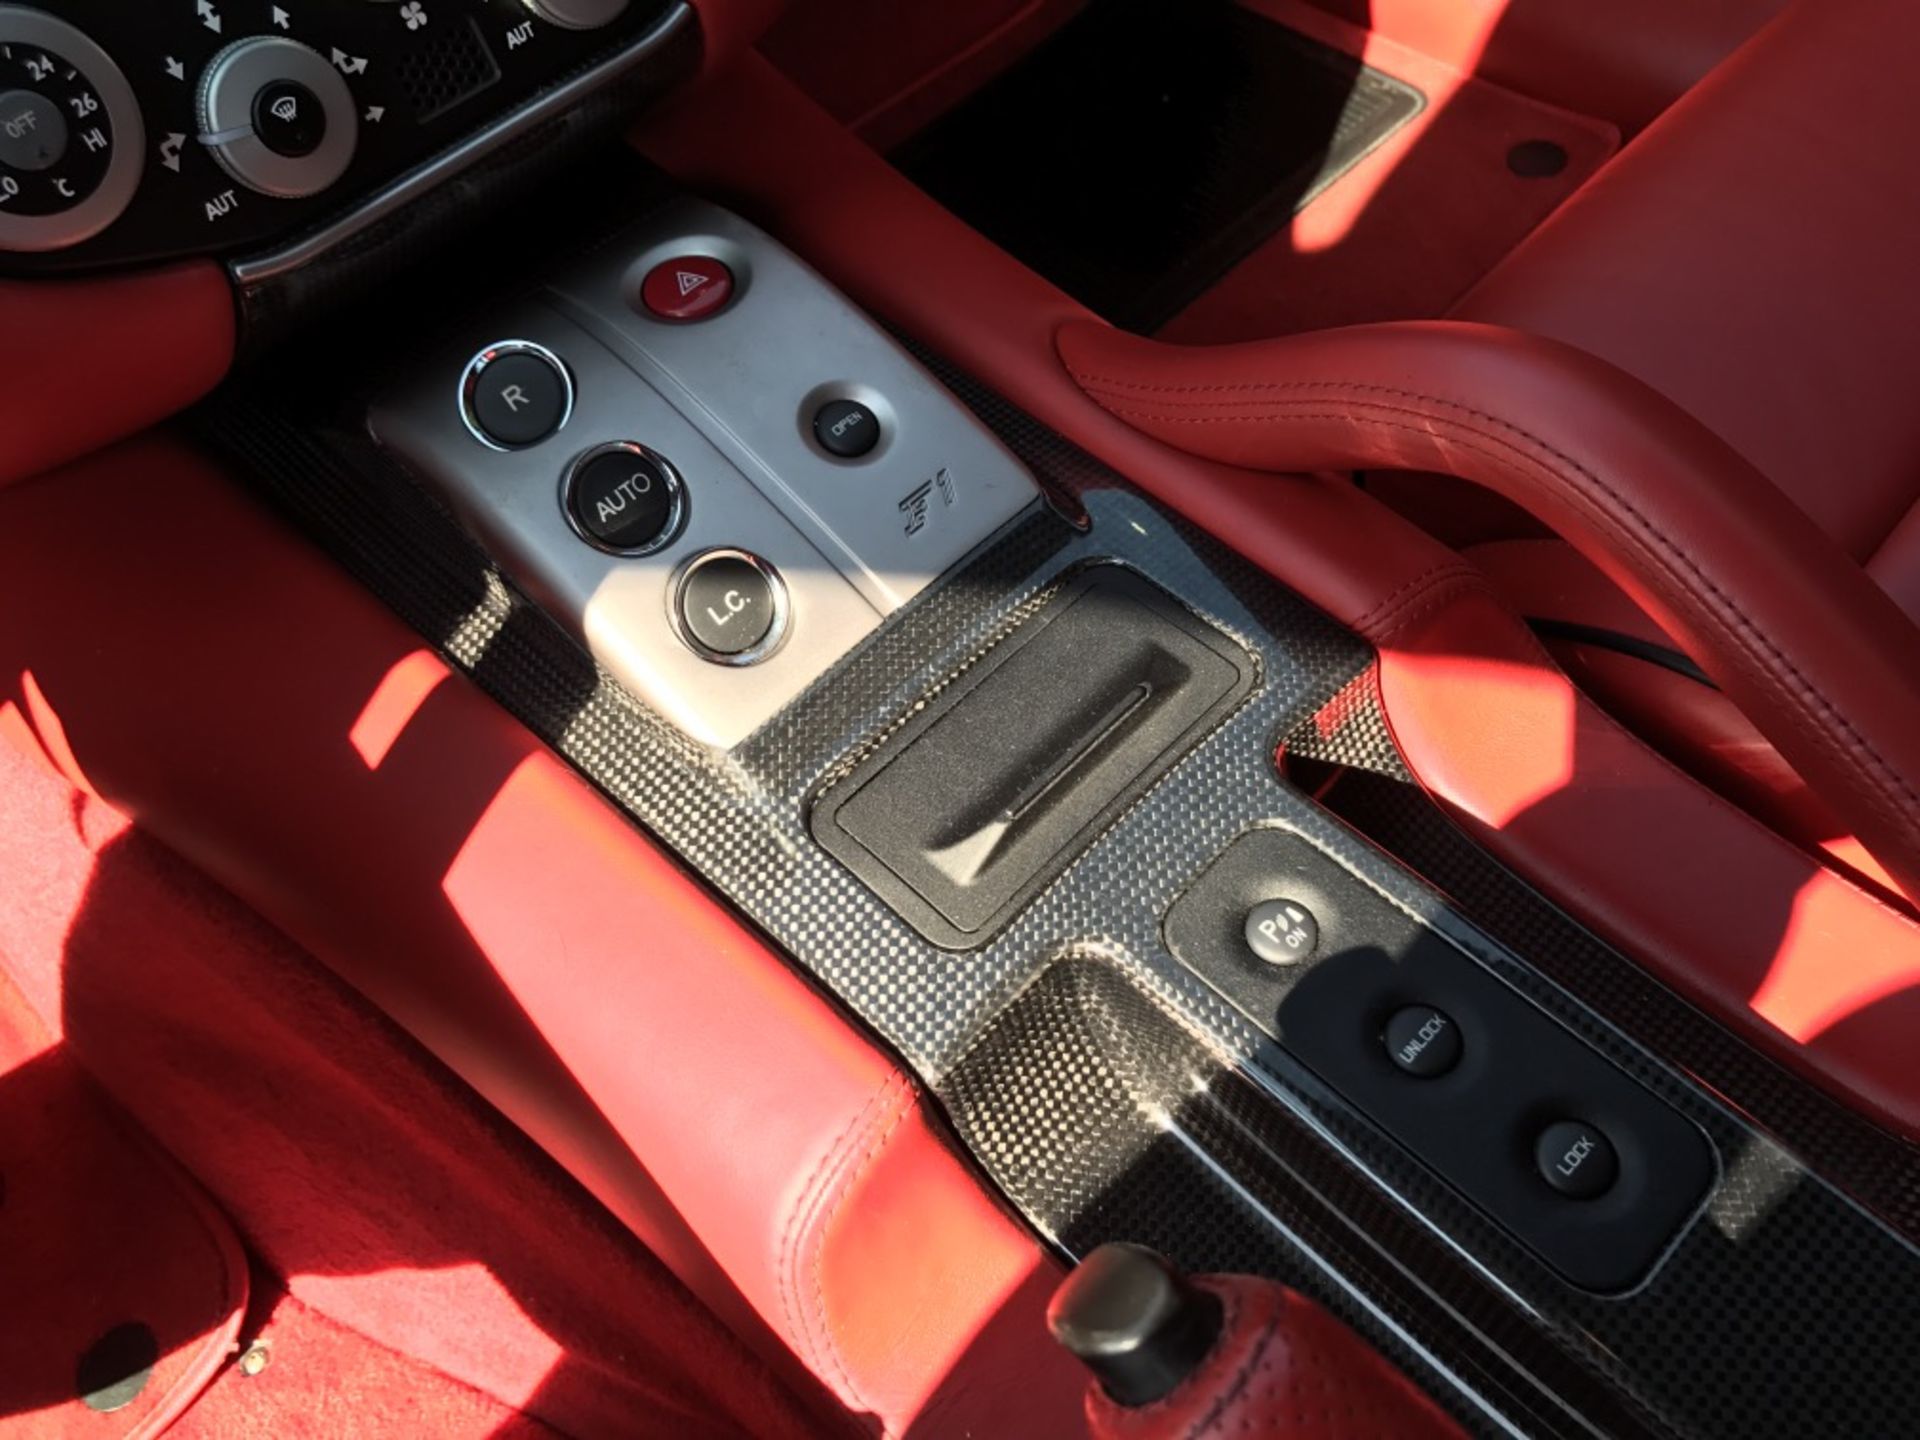 FERRARI 599 GTB LEFT HAND DRIVE - Image 46 of 72